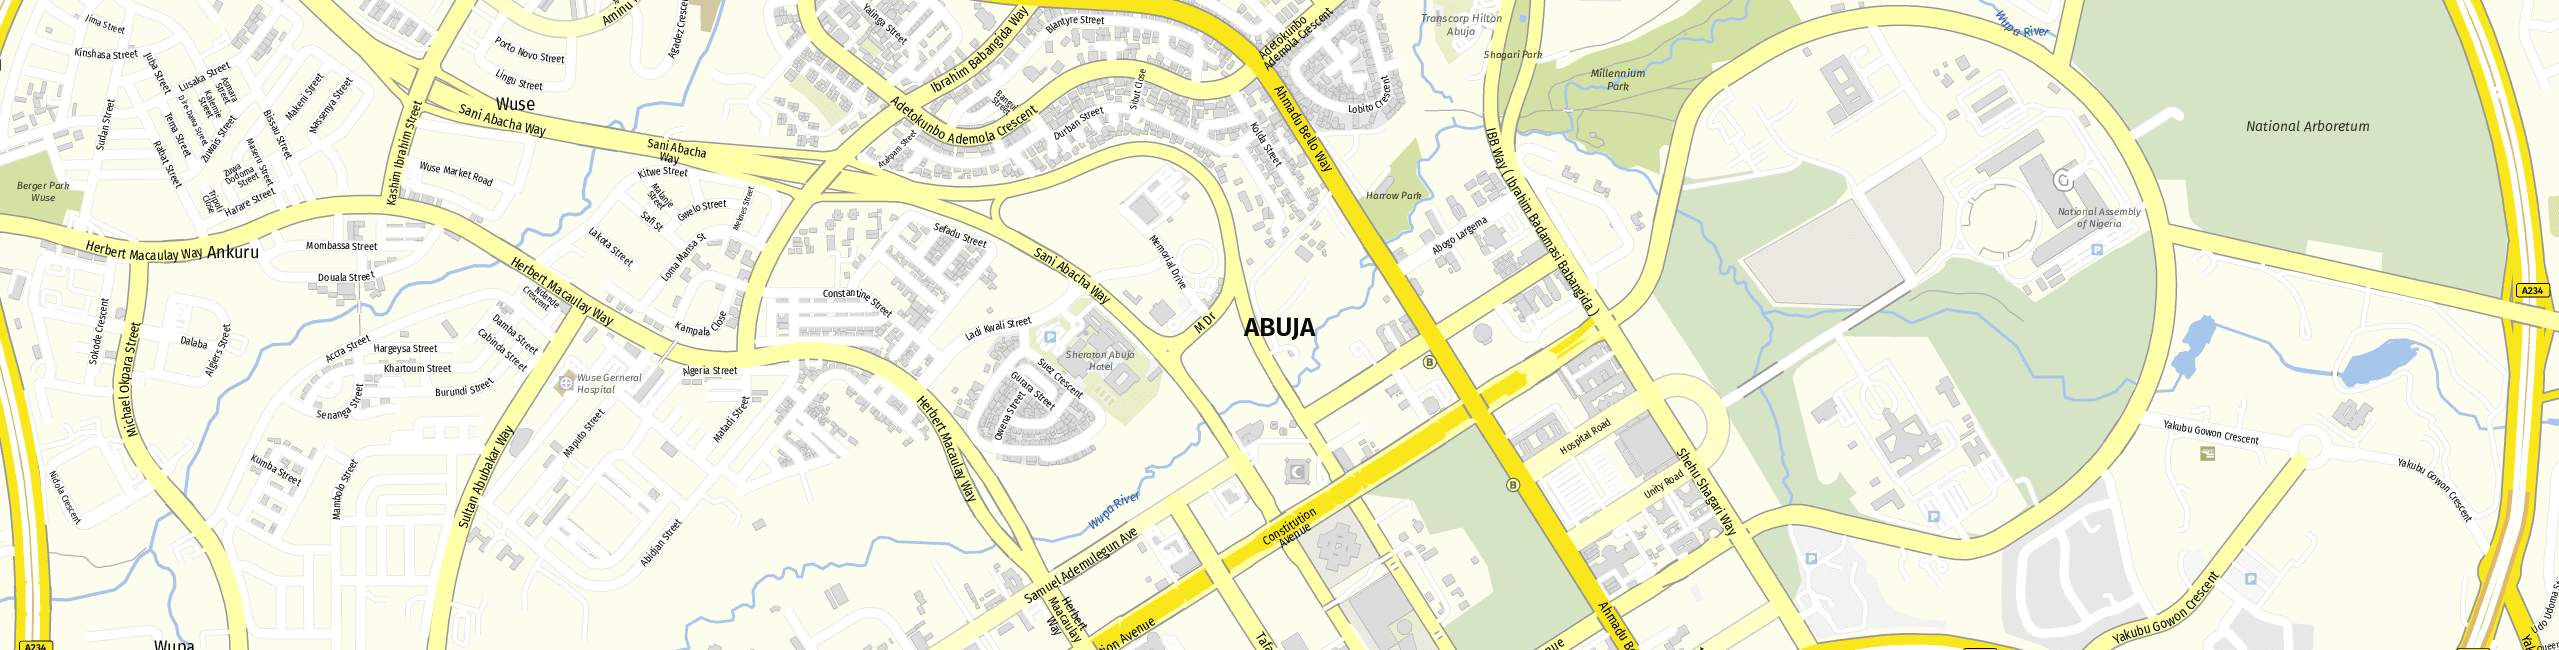 Stadtplan Abuja zum Downloaden.